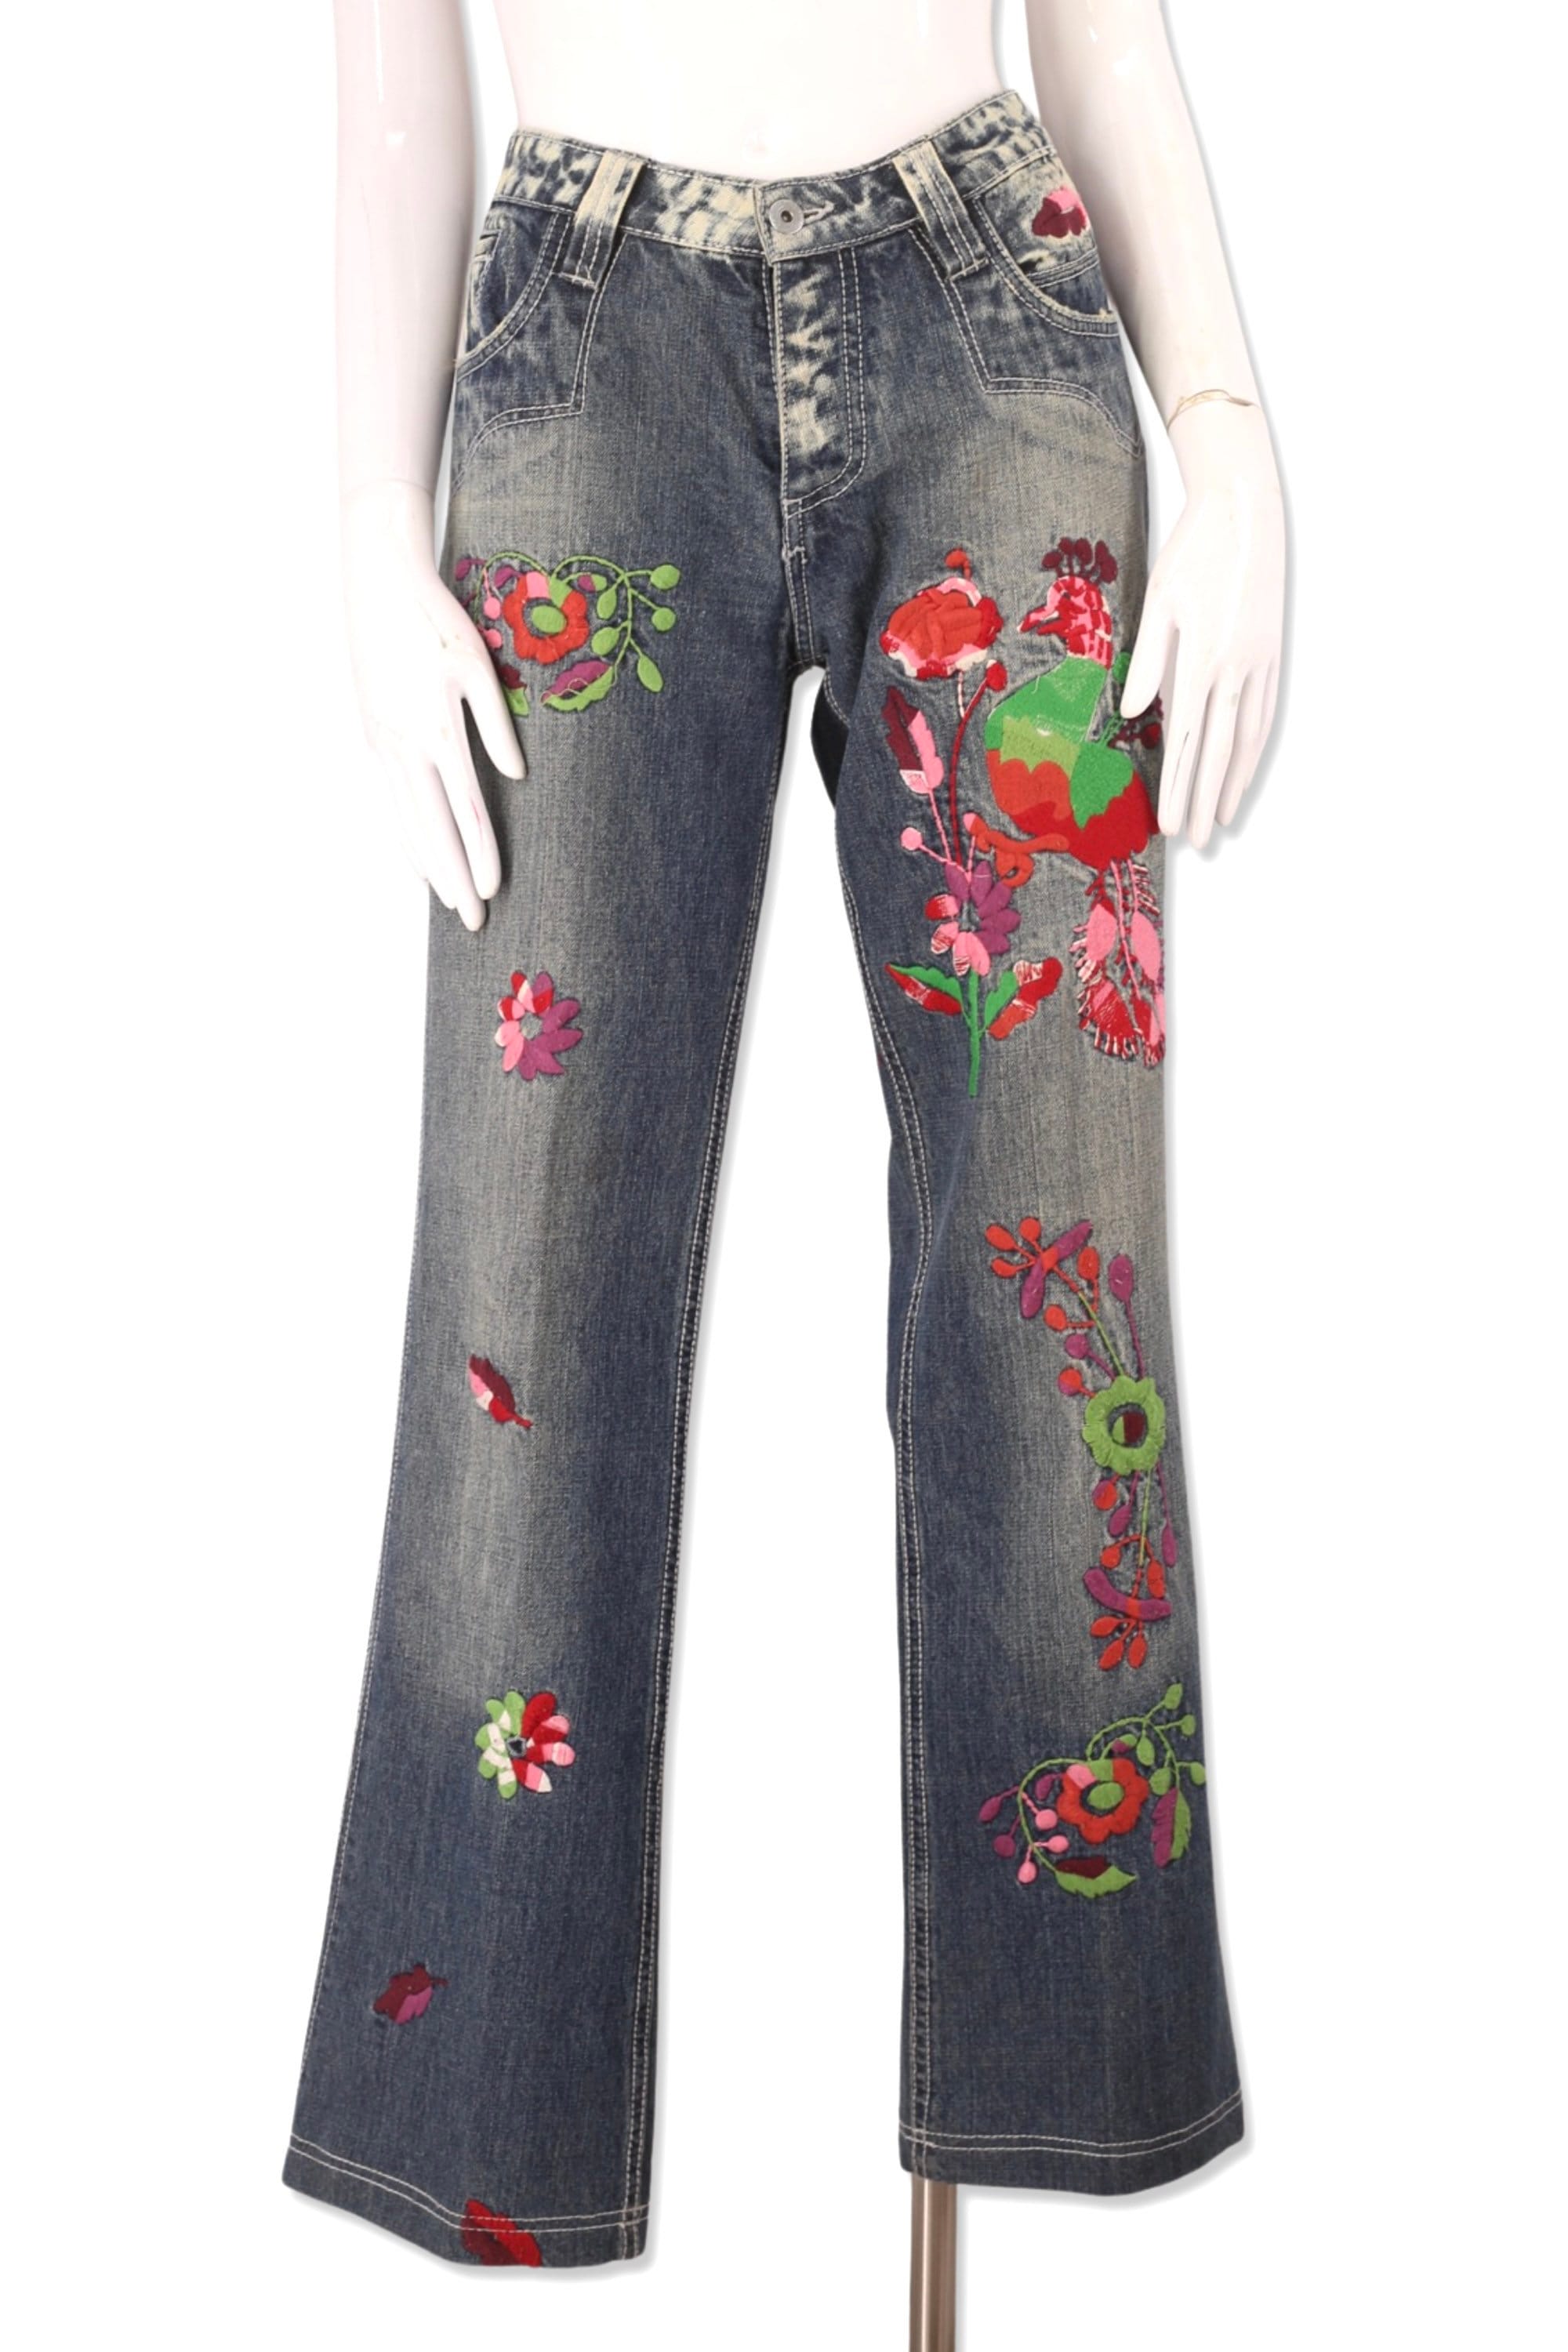 Y2k ANTIK DENIM embroidered jeans 31 / vintage 2000s bird flower folk  embroidered pants / low rise jeans